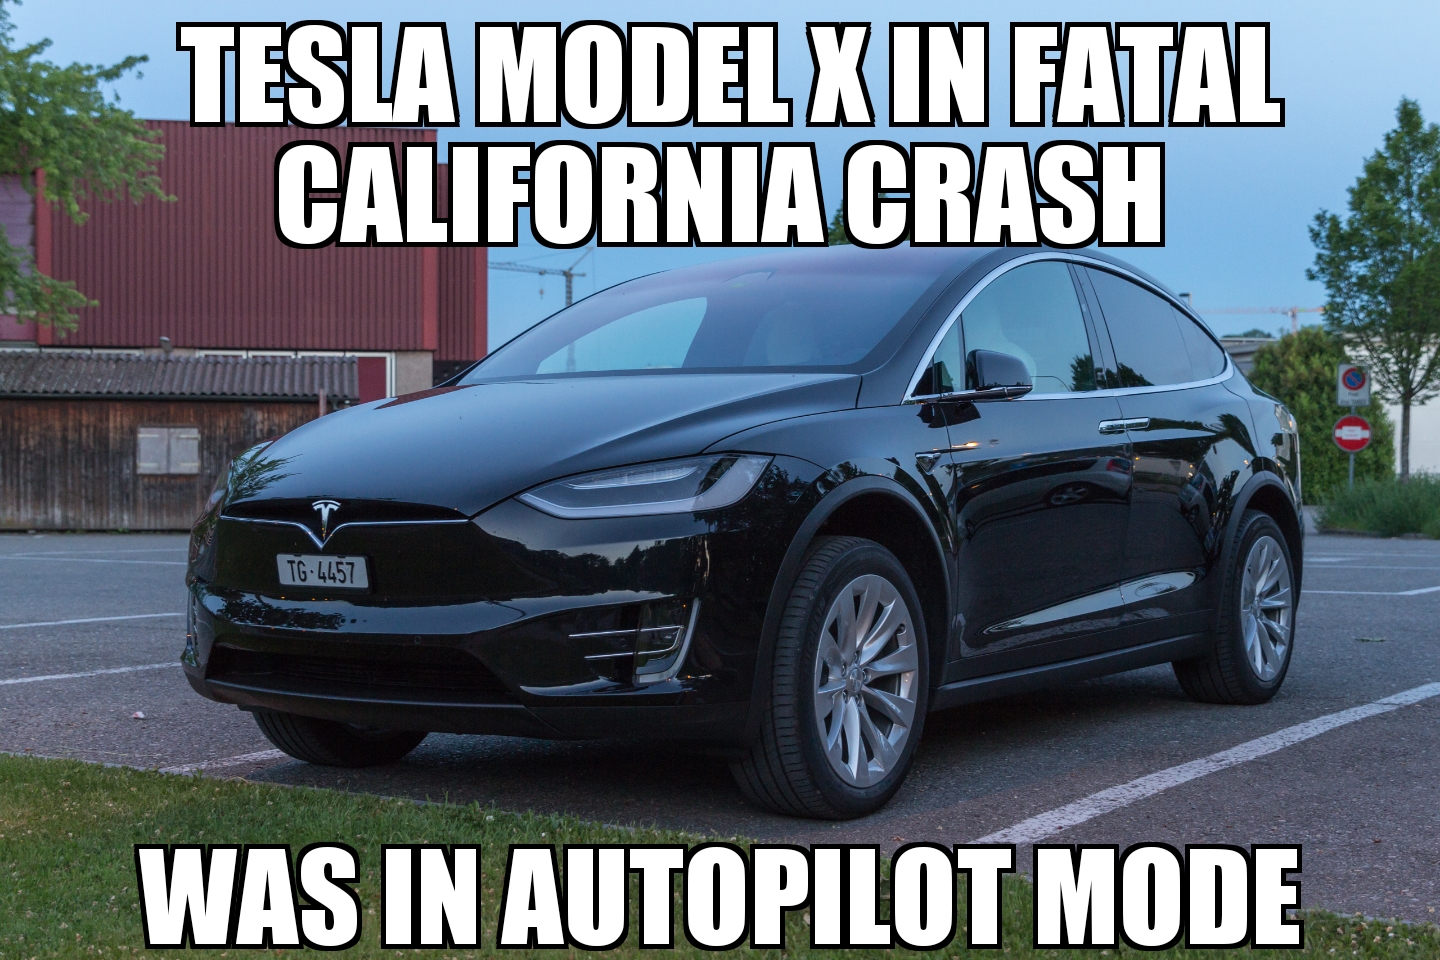 Tesla in fatal crash was on autopilot